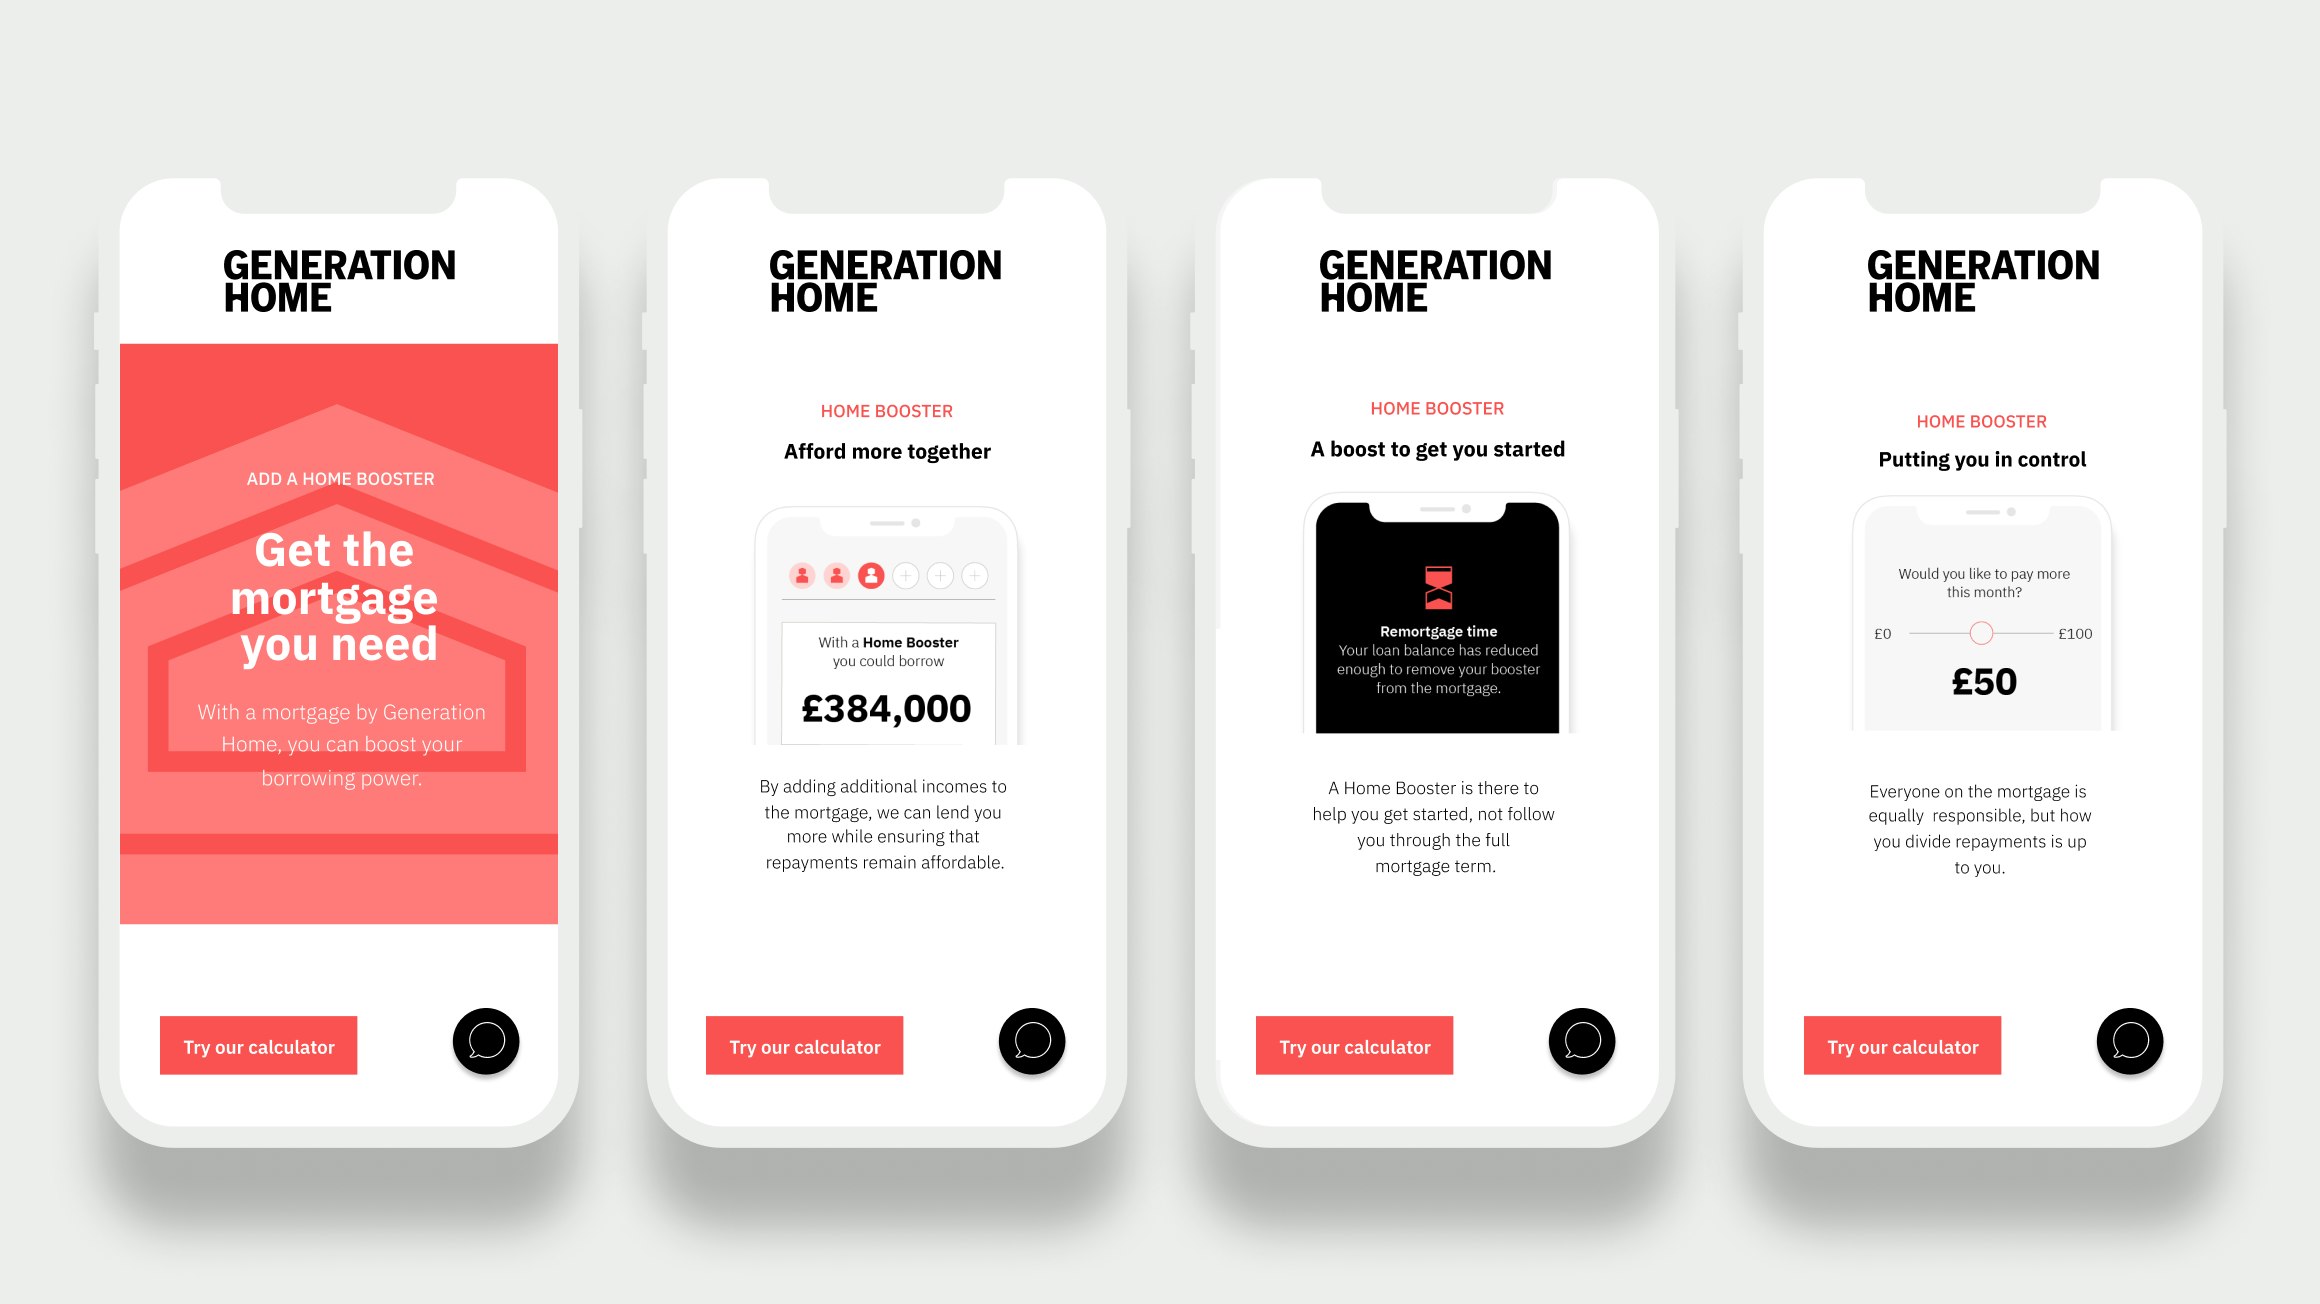 Generation Home launch website